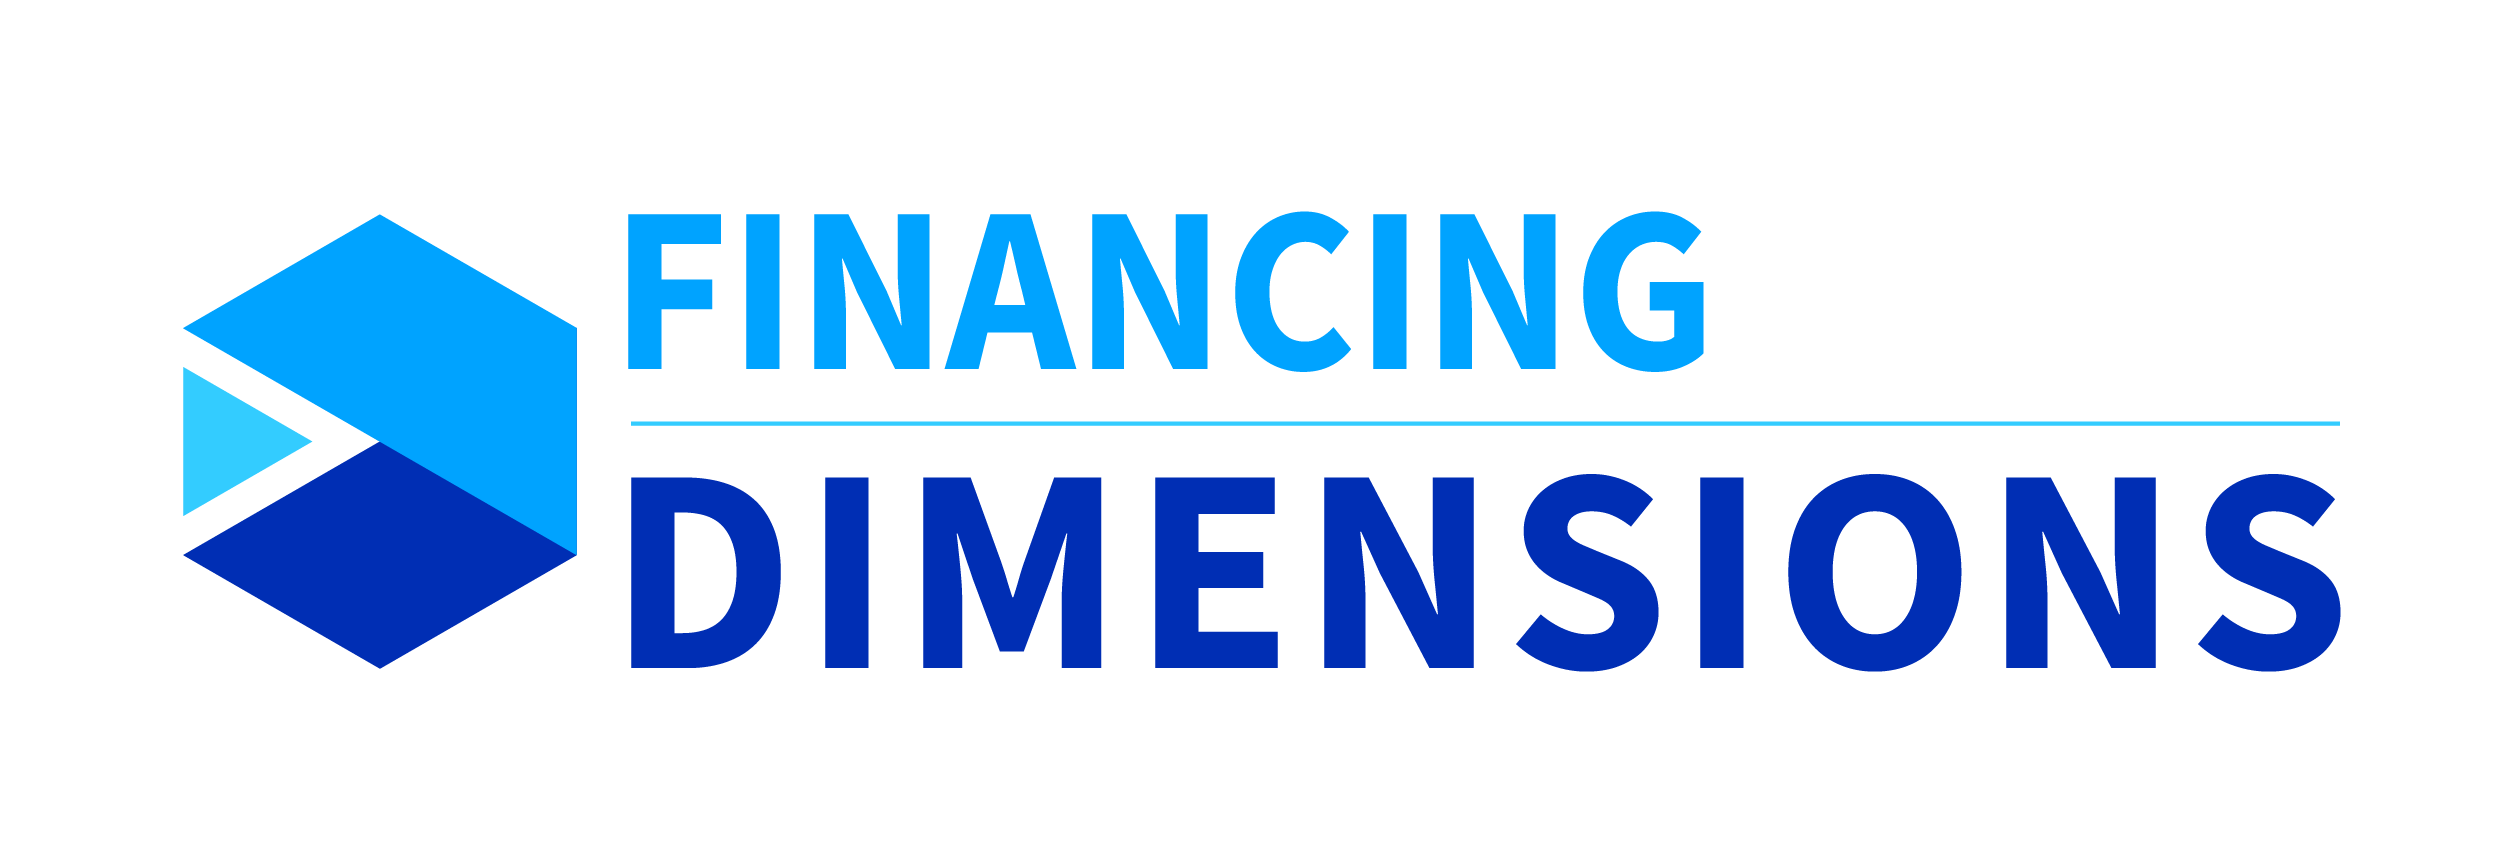 Financing Dimensions - Acceltech Pte Ltd